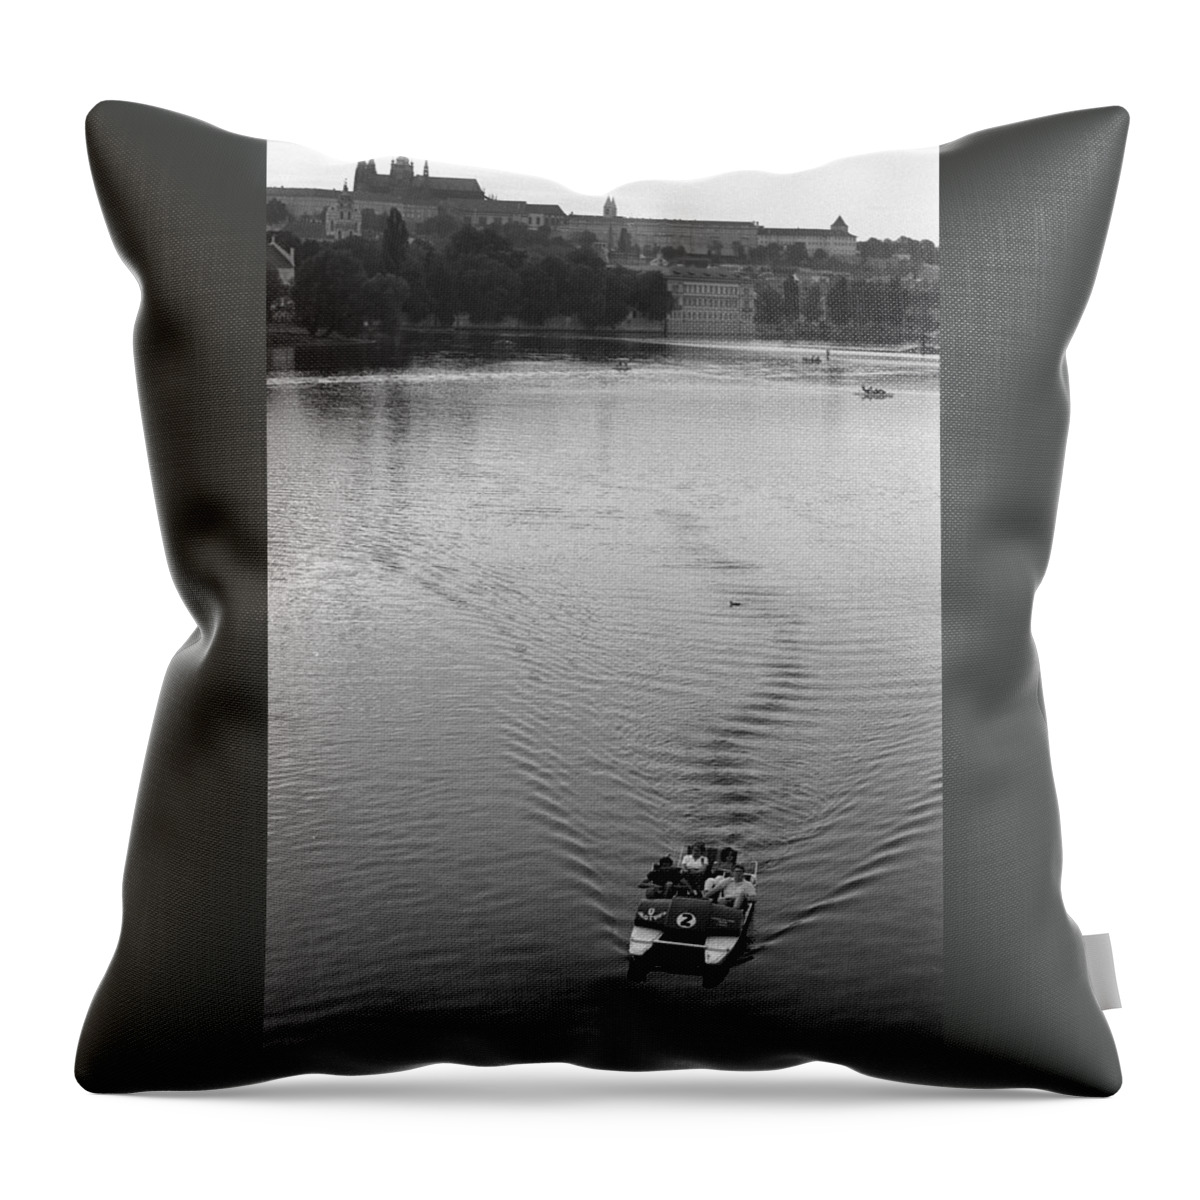 Prague Throw Pillow featuring the photograph Prague III by Patrick Klauss